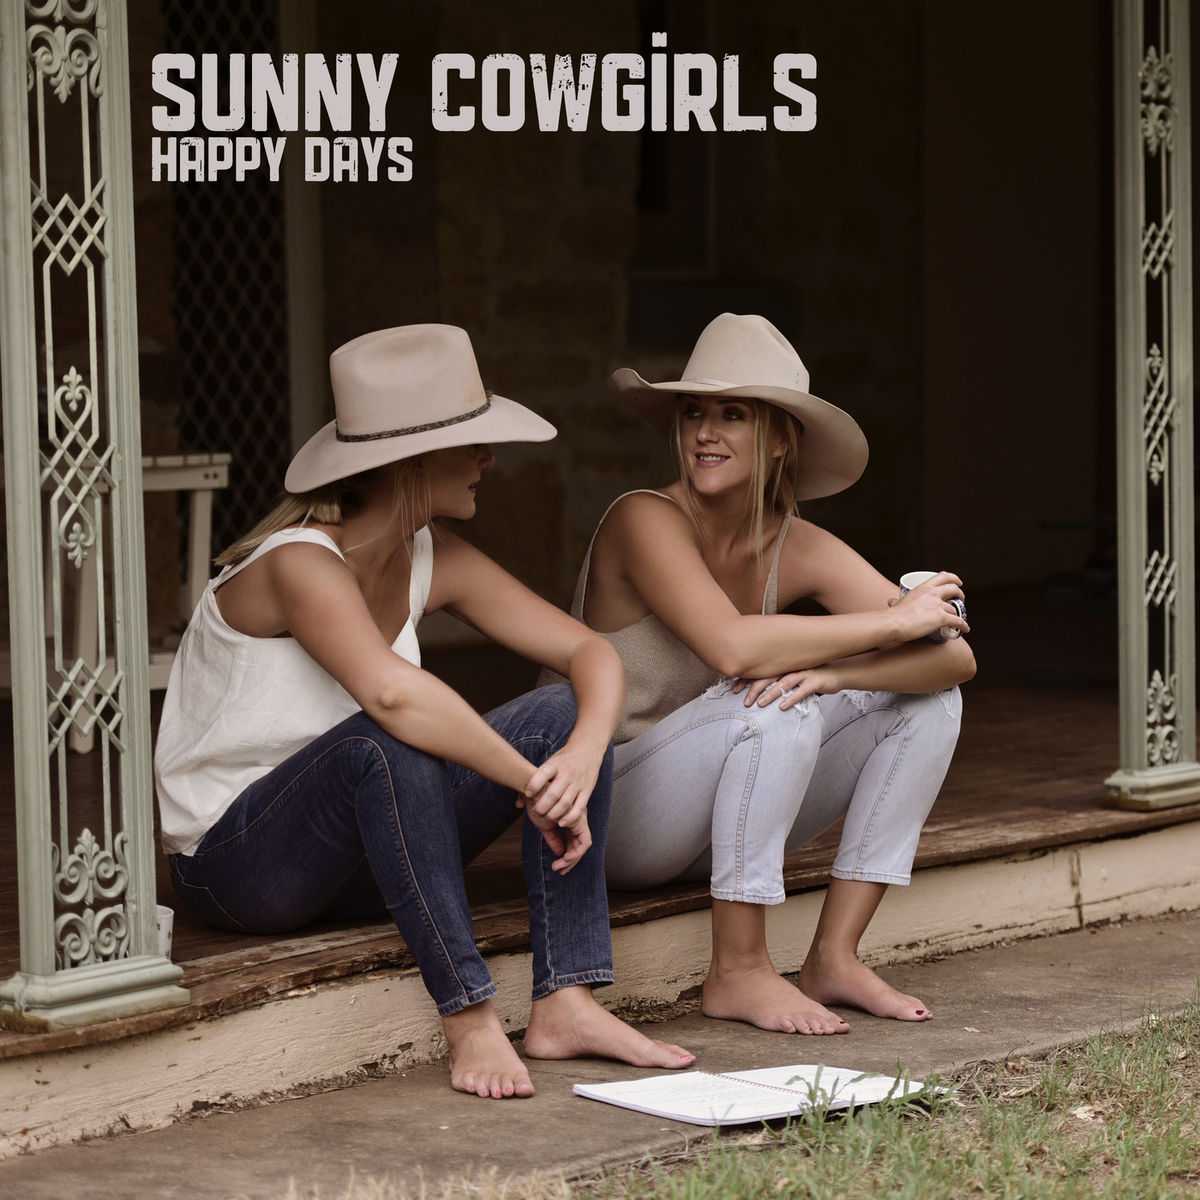 The Sunny Cowg!rls - Happy Days